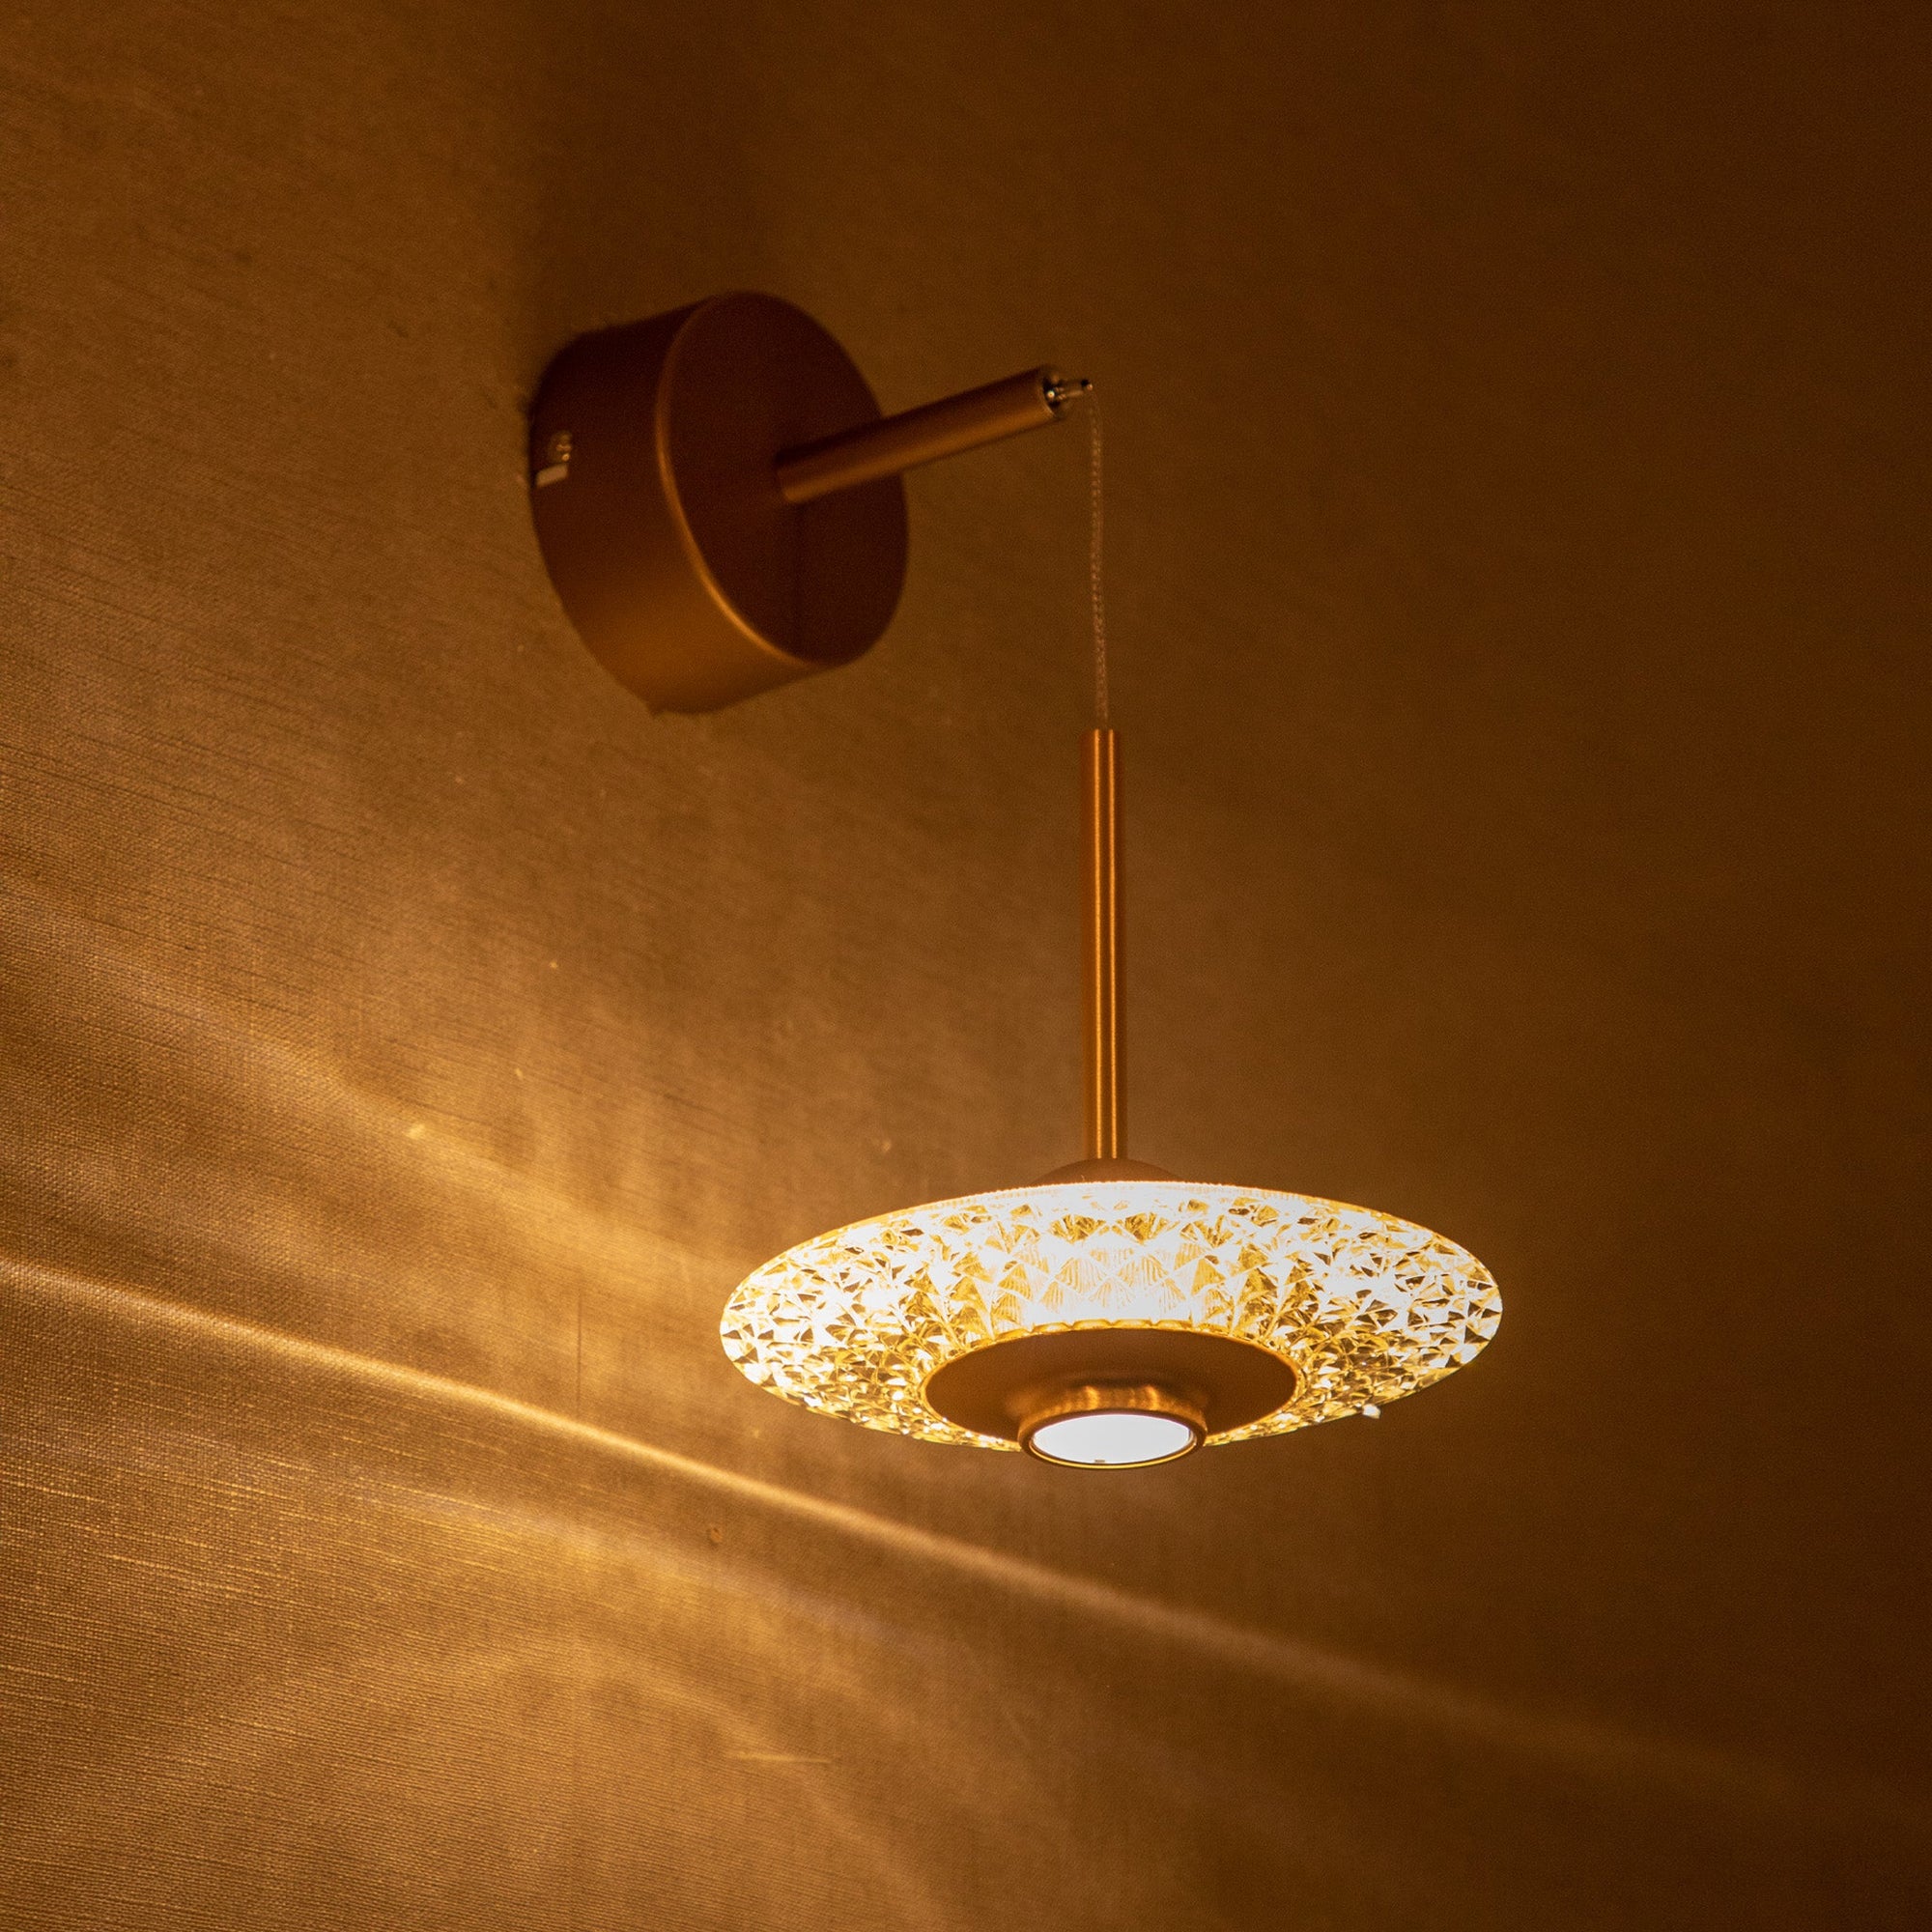 Buy Inmotion LED Wall Light modern lamp